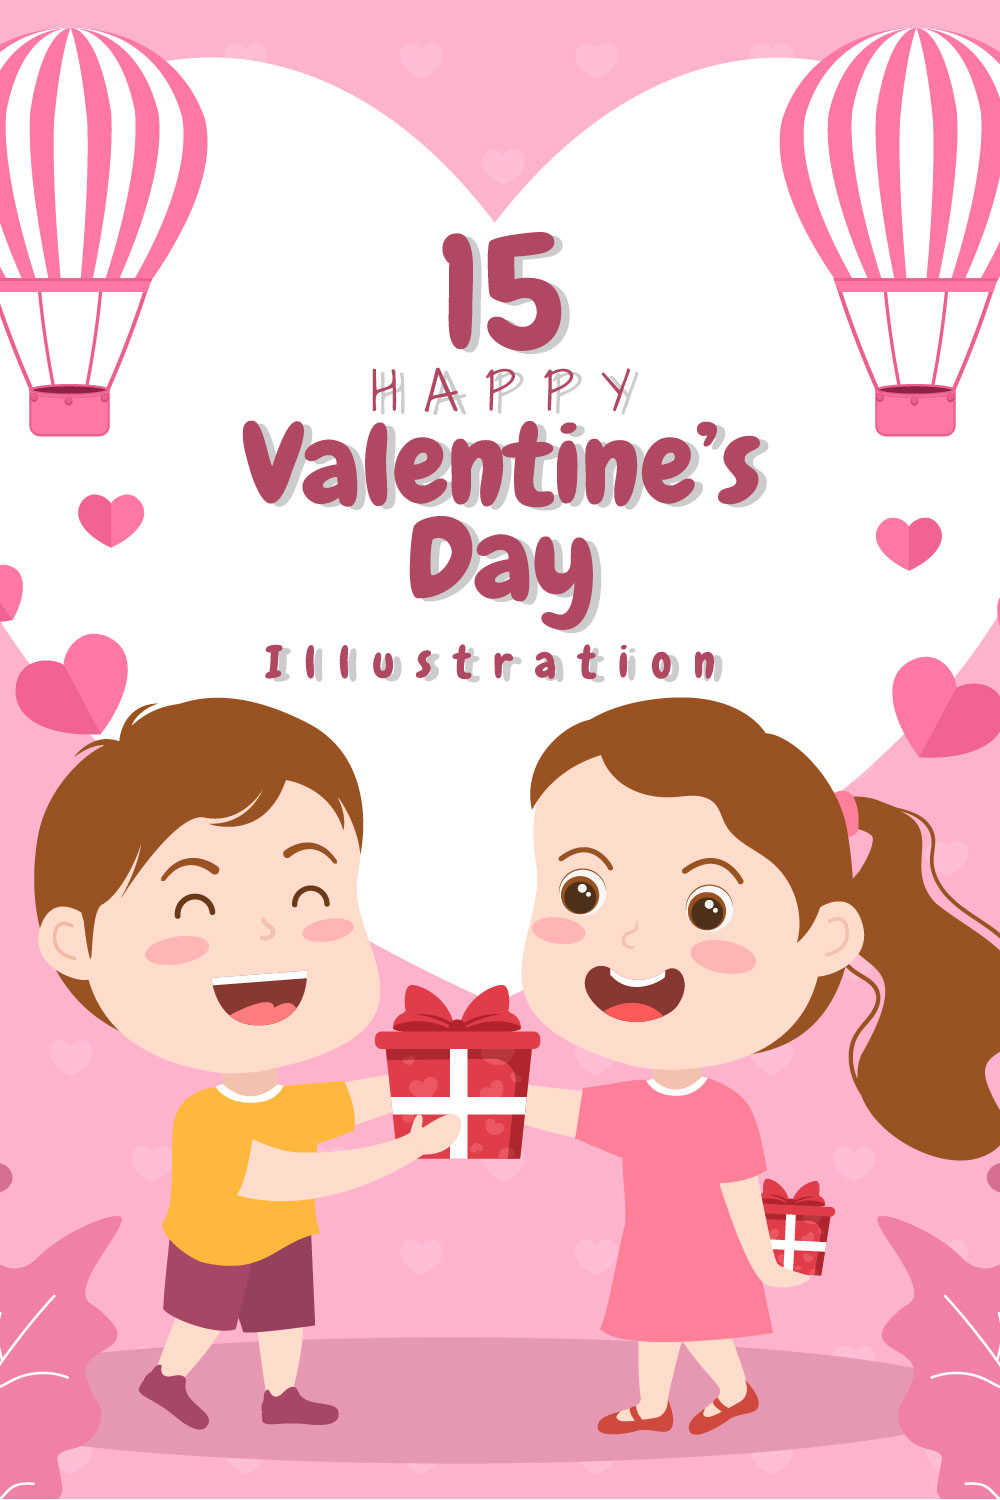 15 Happy Valentines Day Illustration pinterest image.